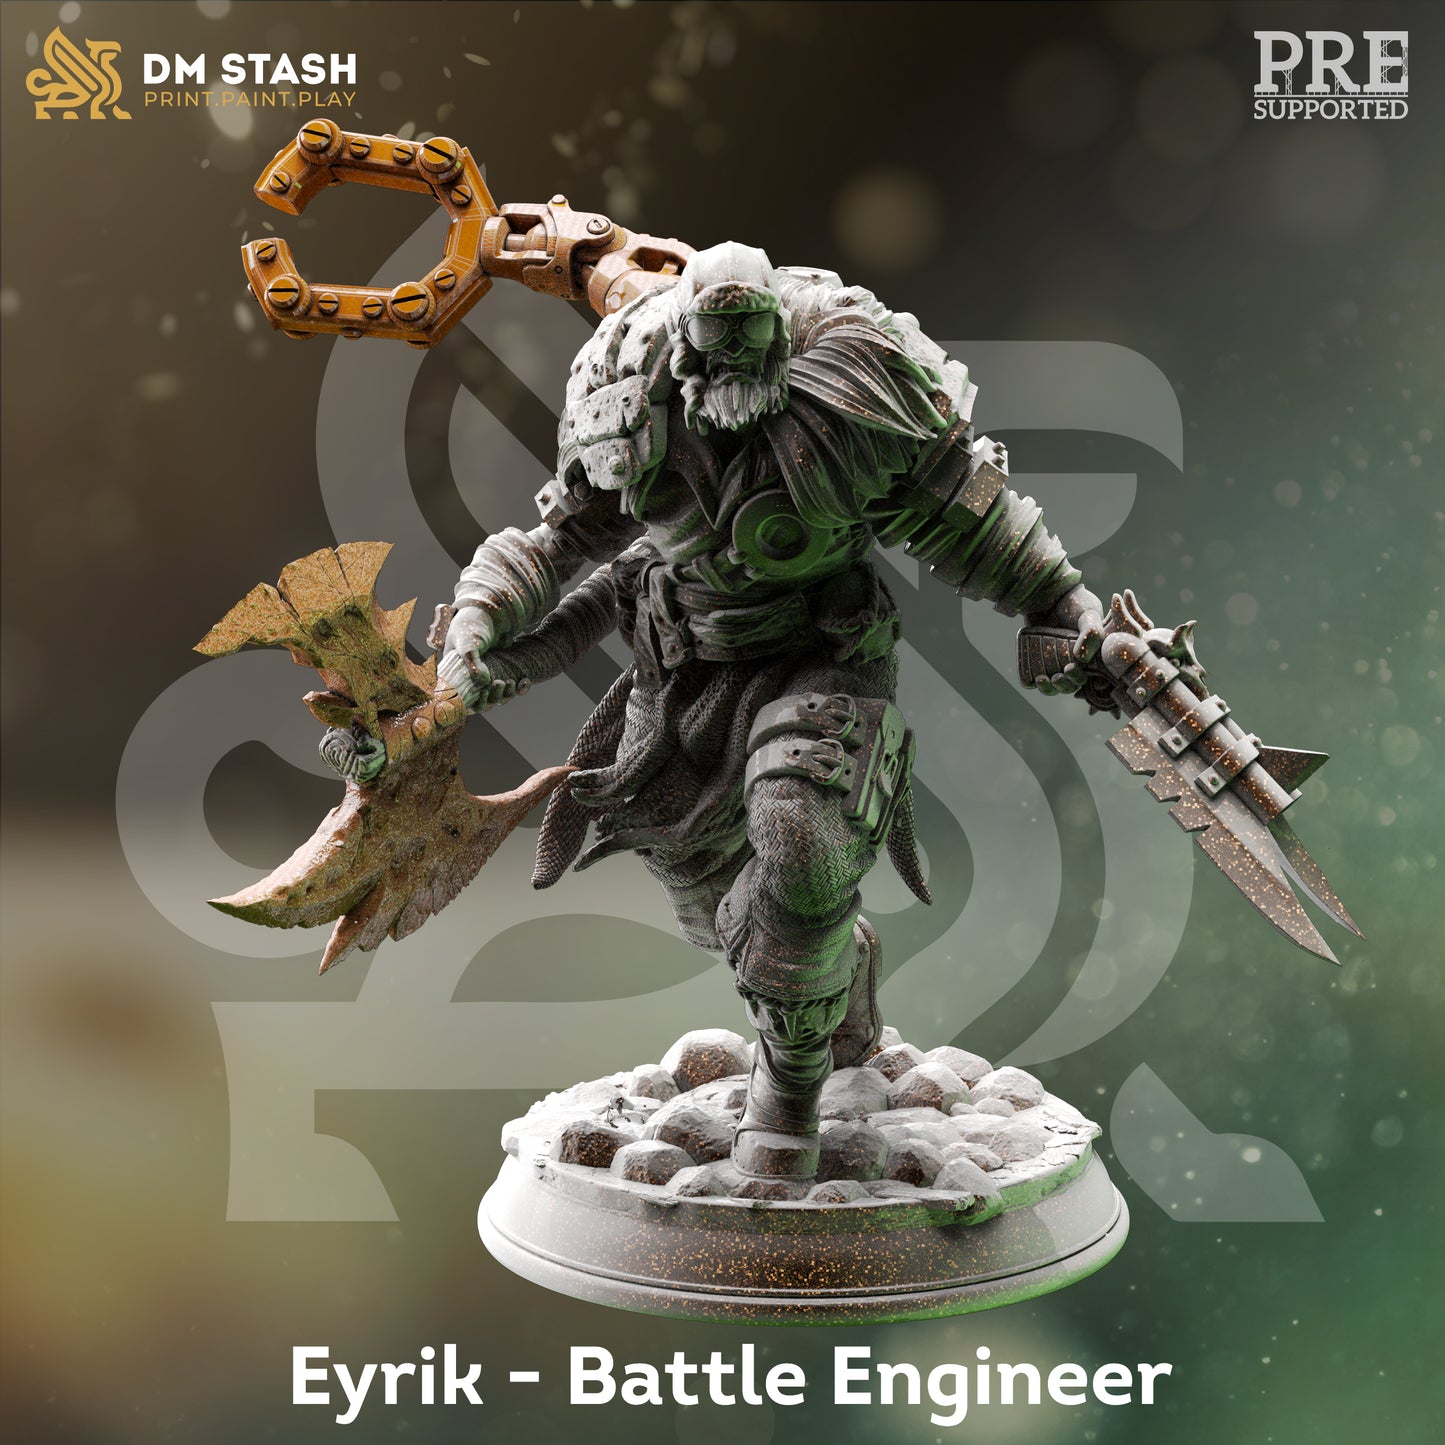 Eyrik - Battle Engineer